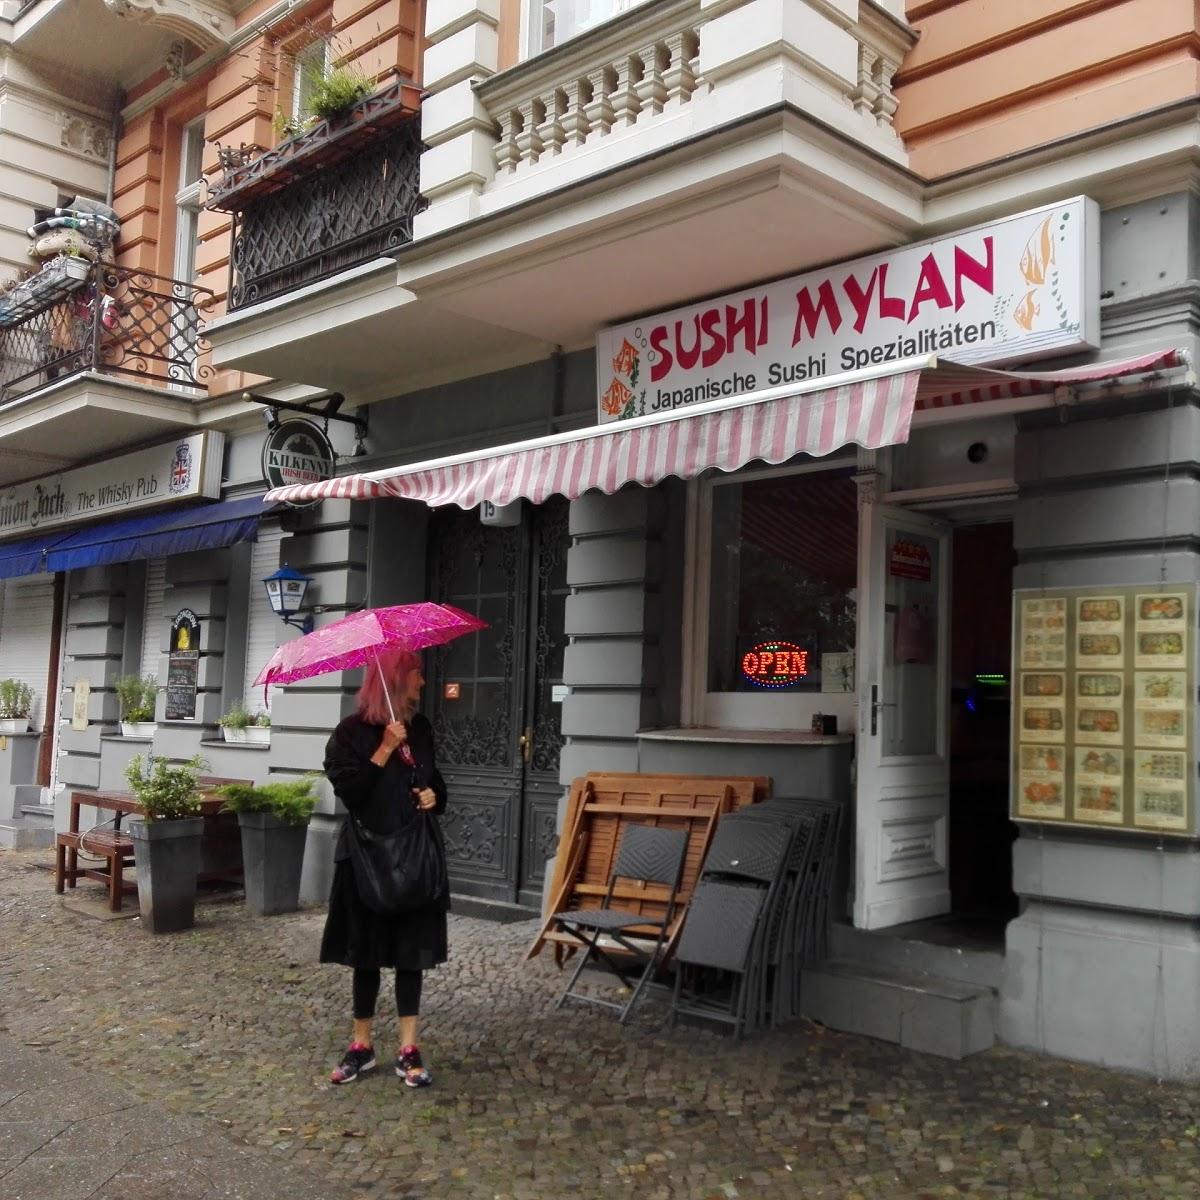 Restaurant "Sushi Mylan" in Berlin